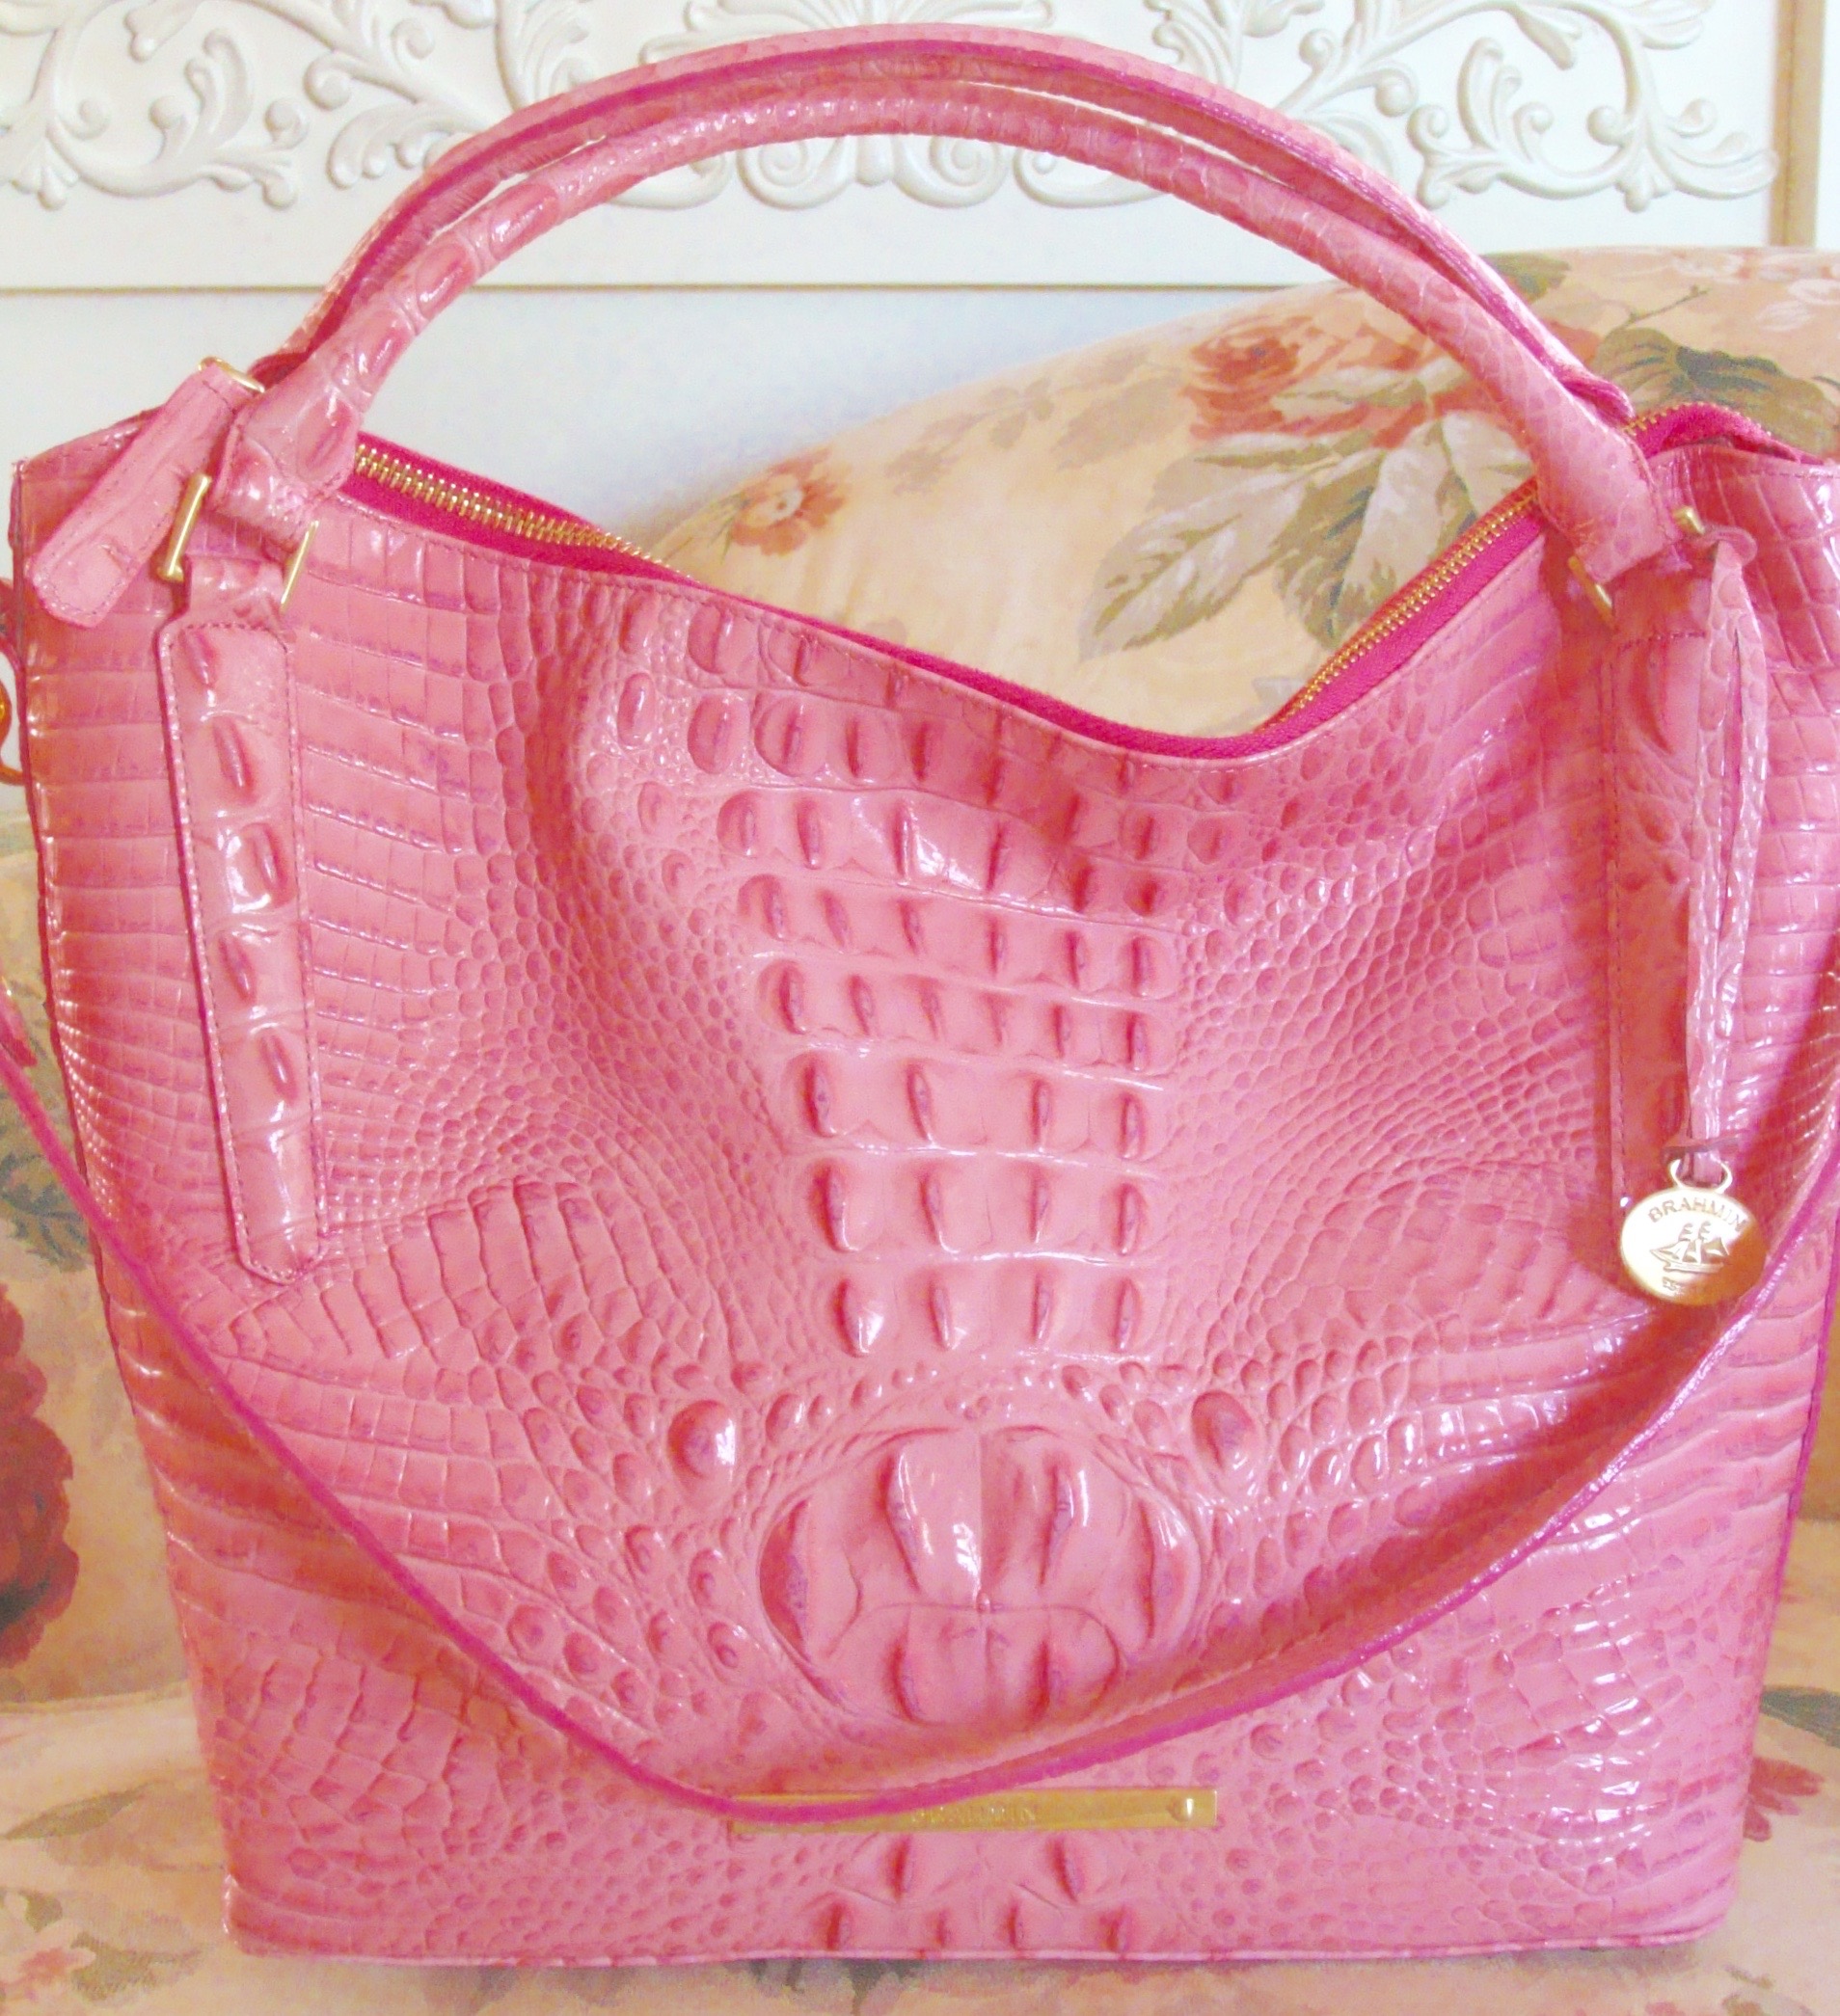 Brahmin Norah Hobo Bag Pink Lychee Melbourne Handbag